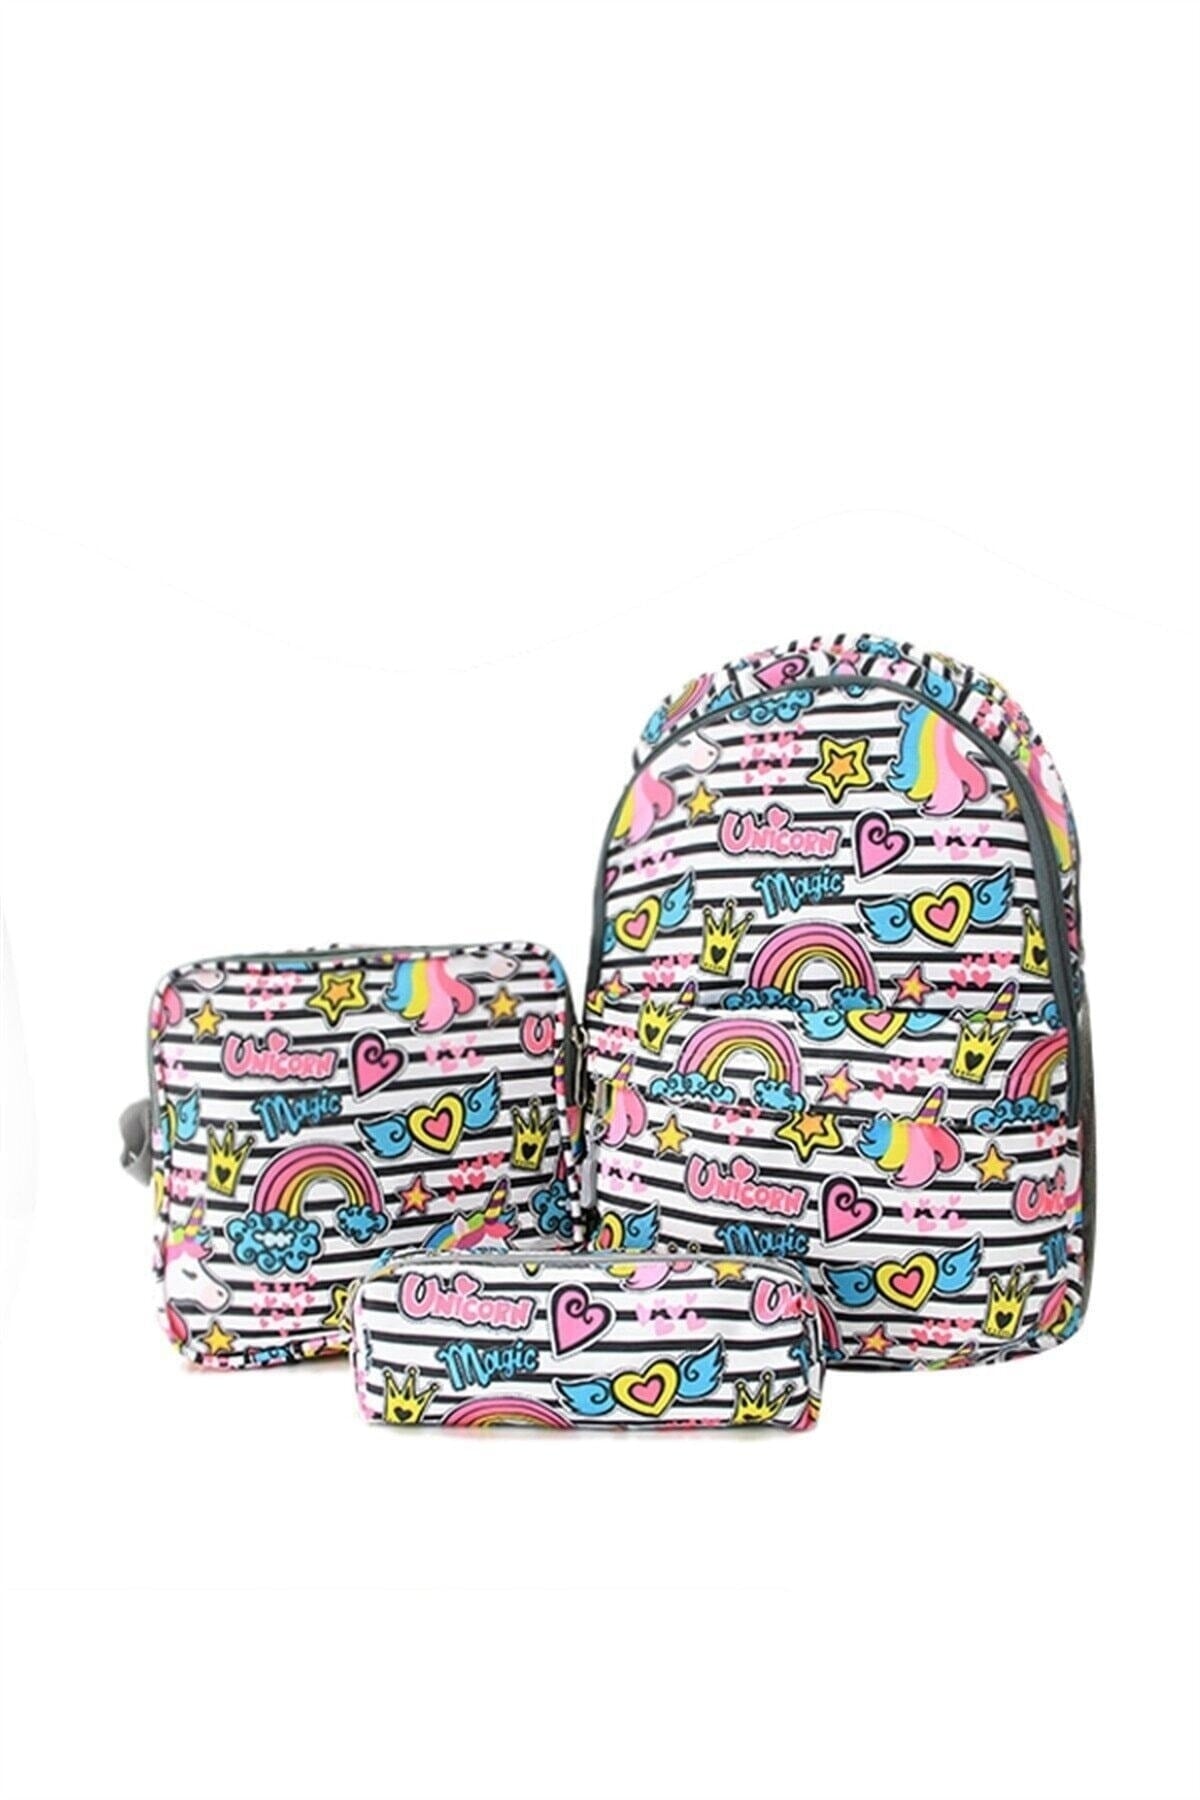 Line Unicorn Patterned Triple Primary School Bag Set